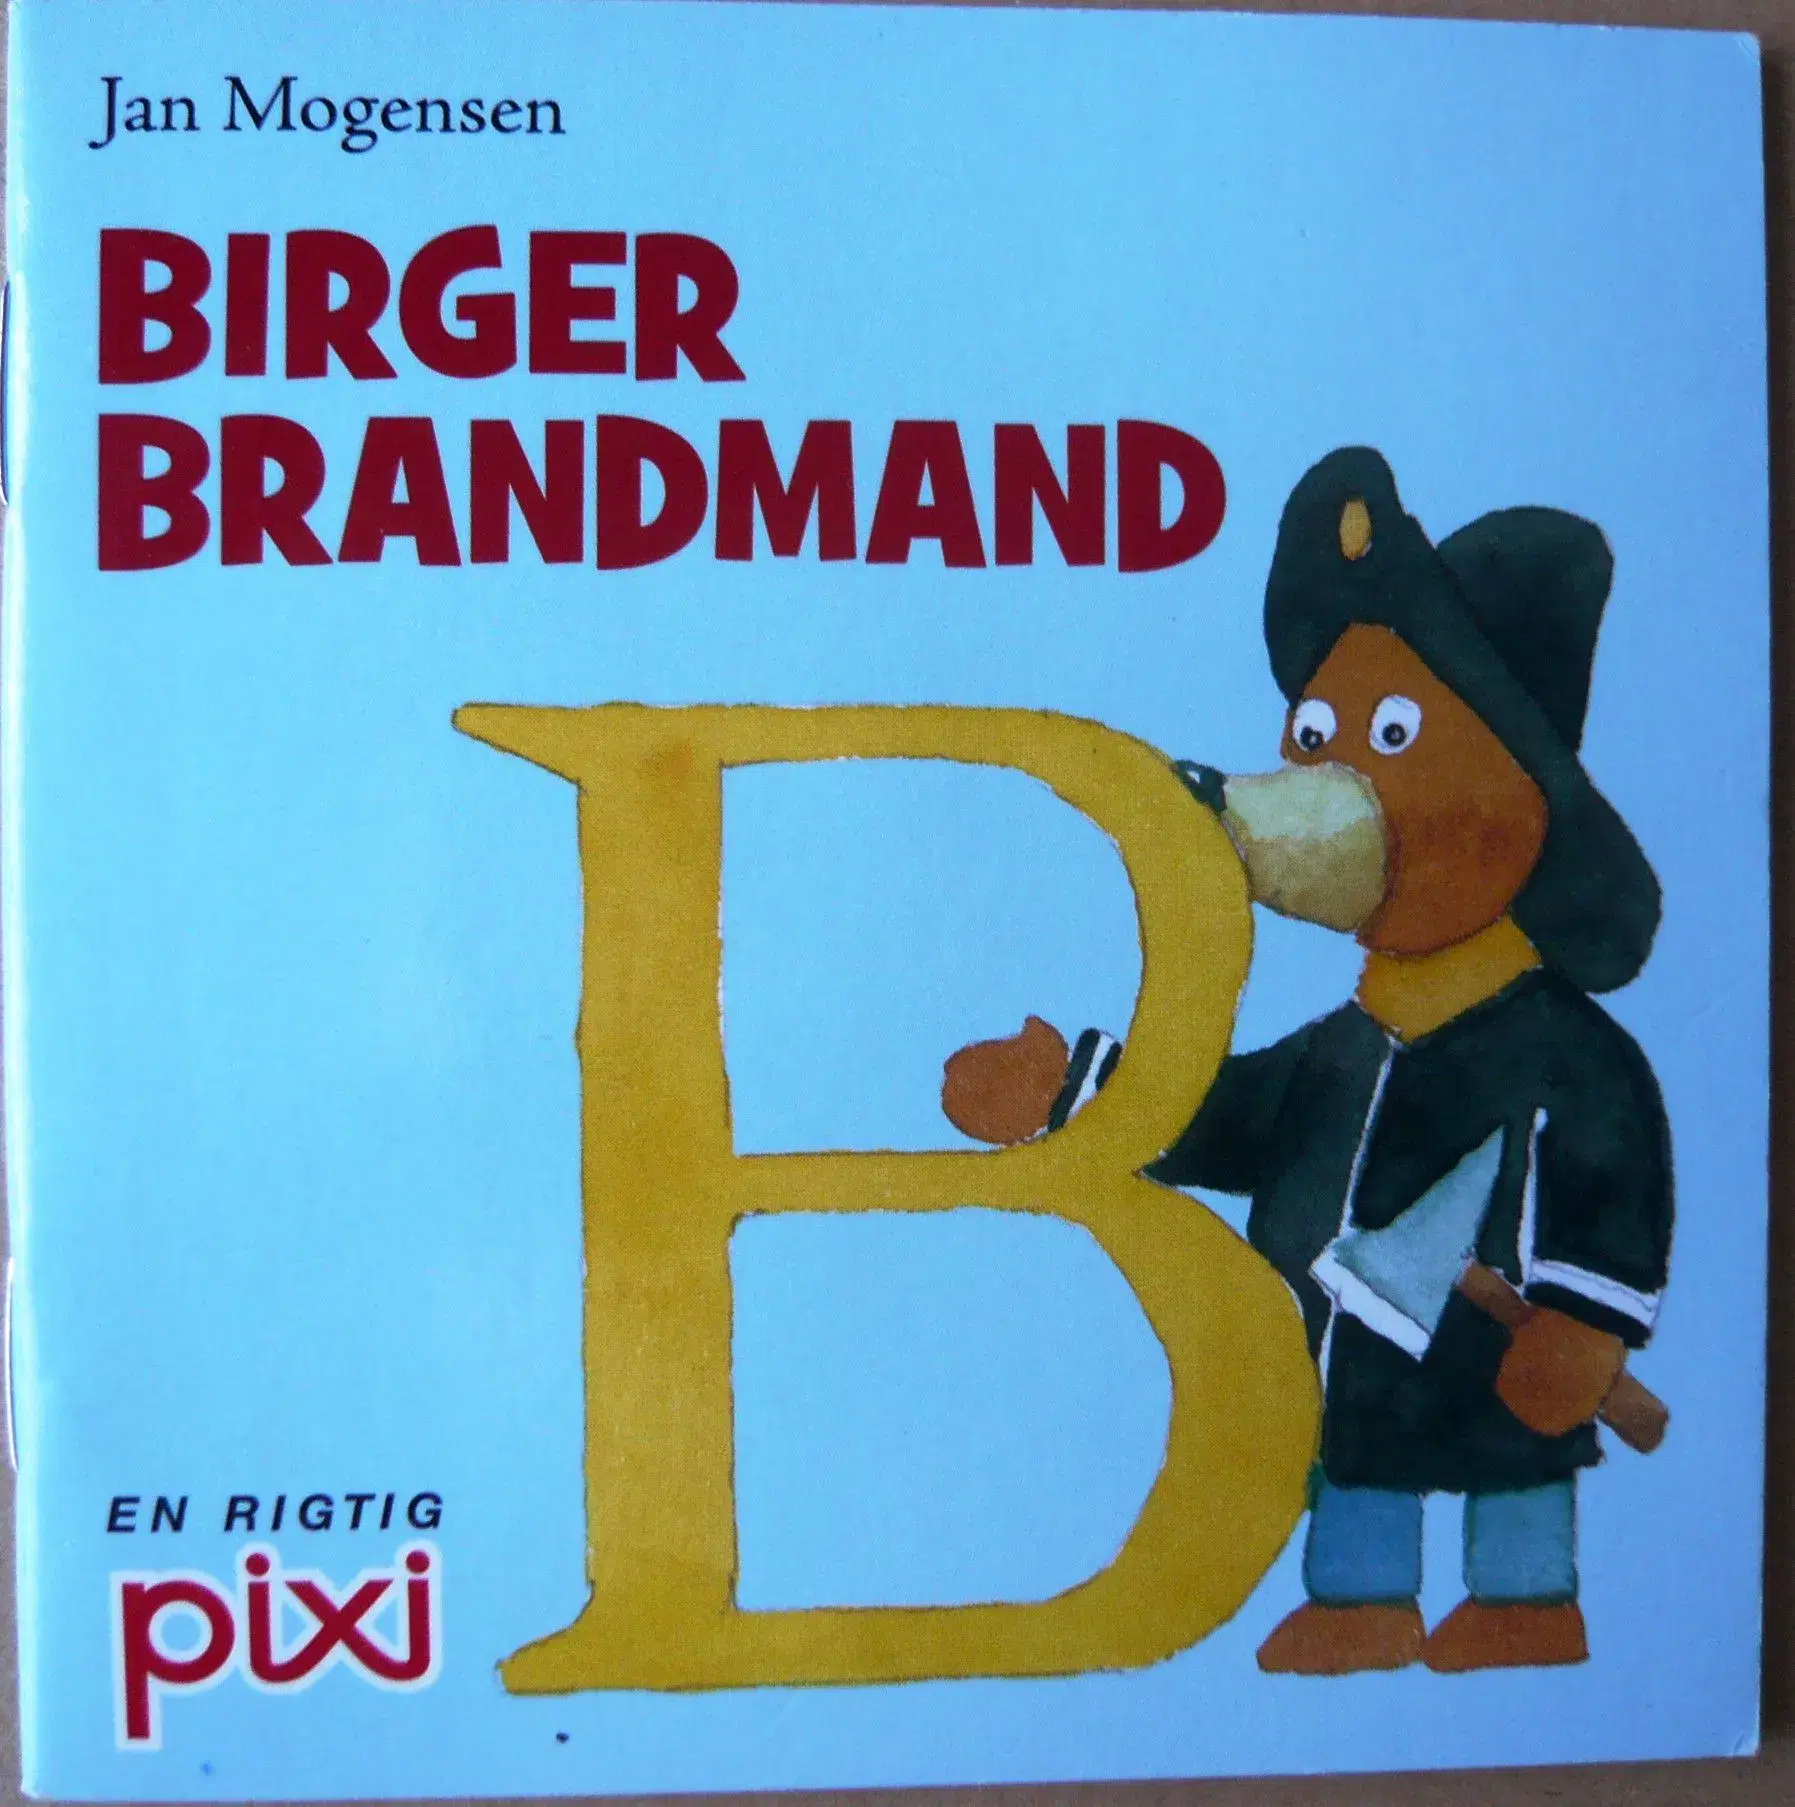 PIXI: Alfabetet af Jan Mogensen